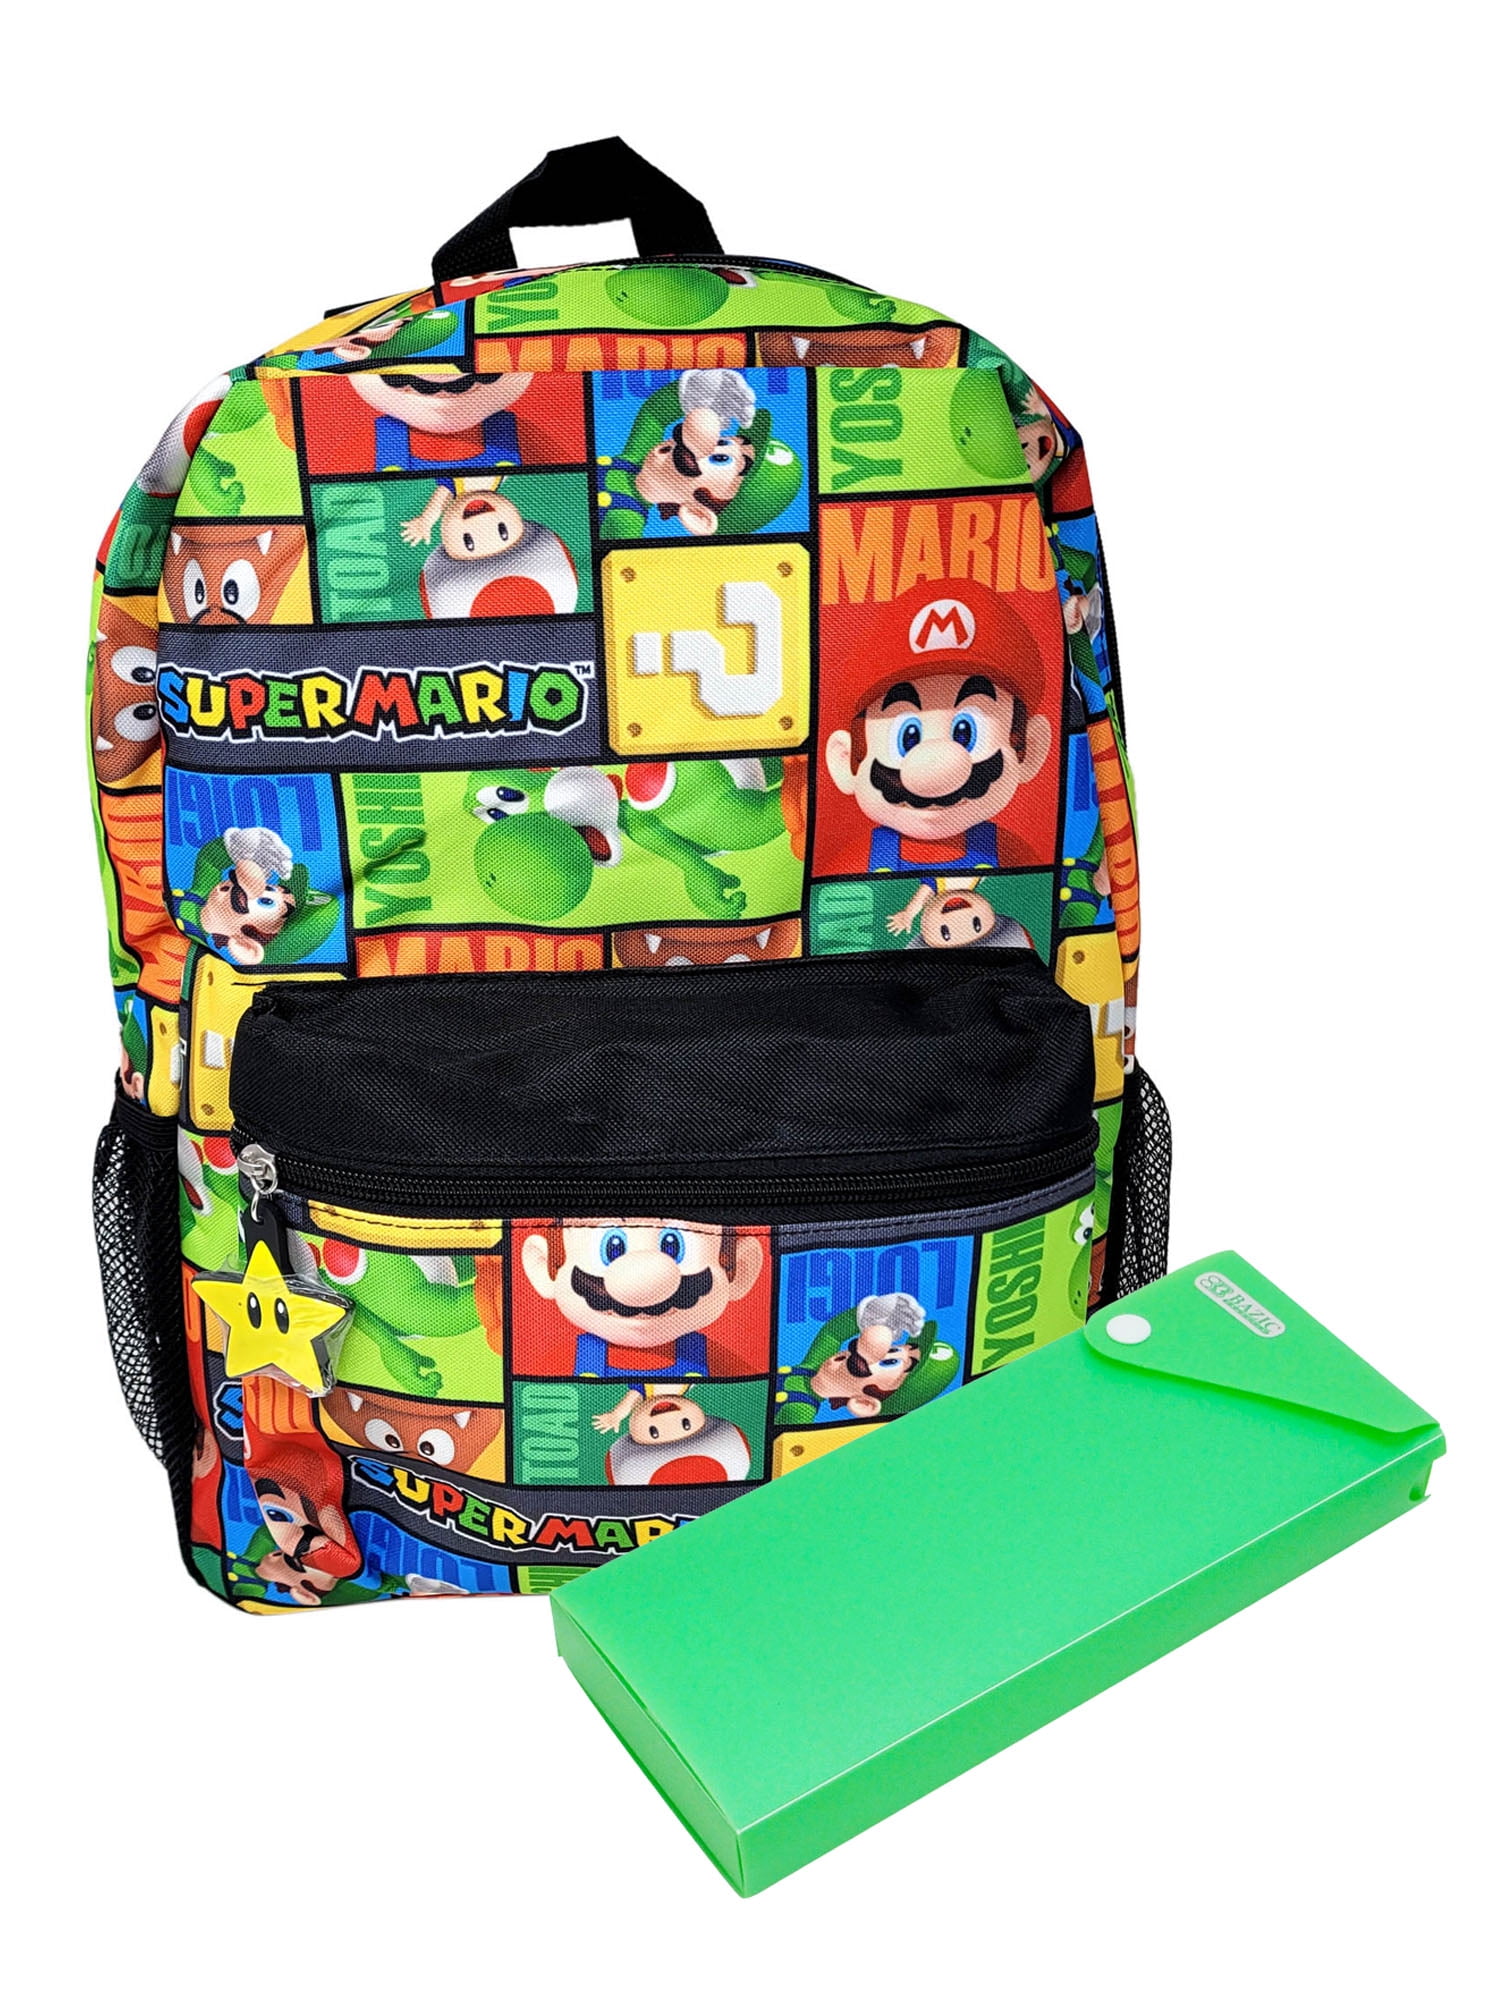 Personalized Nintendo Super Mario Lunch Bag Luigi Toad Bowser